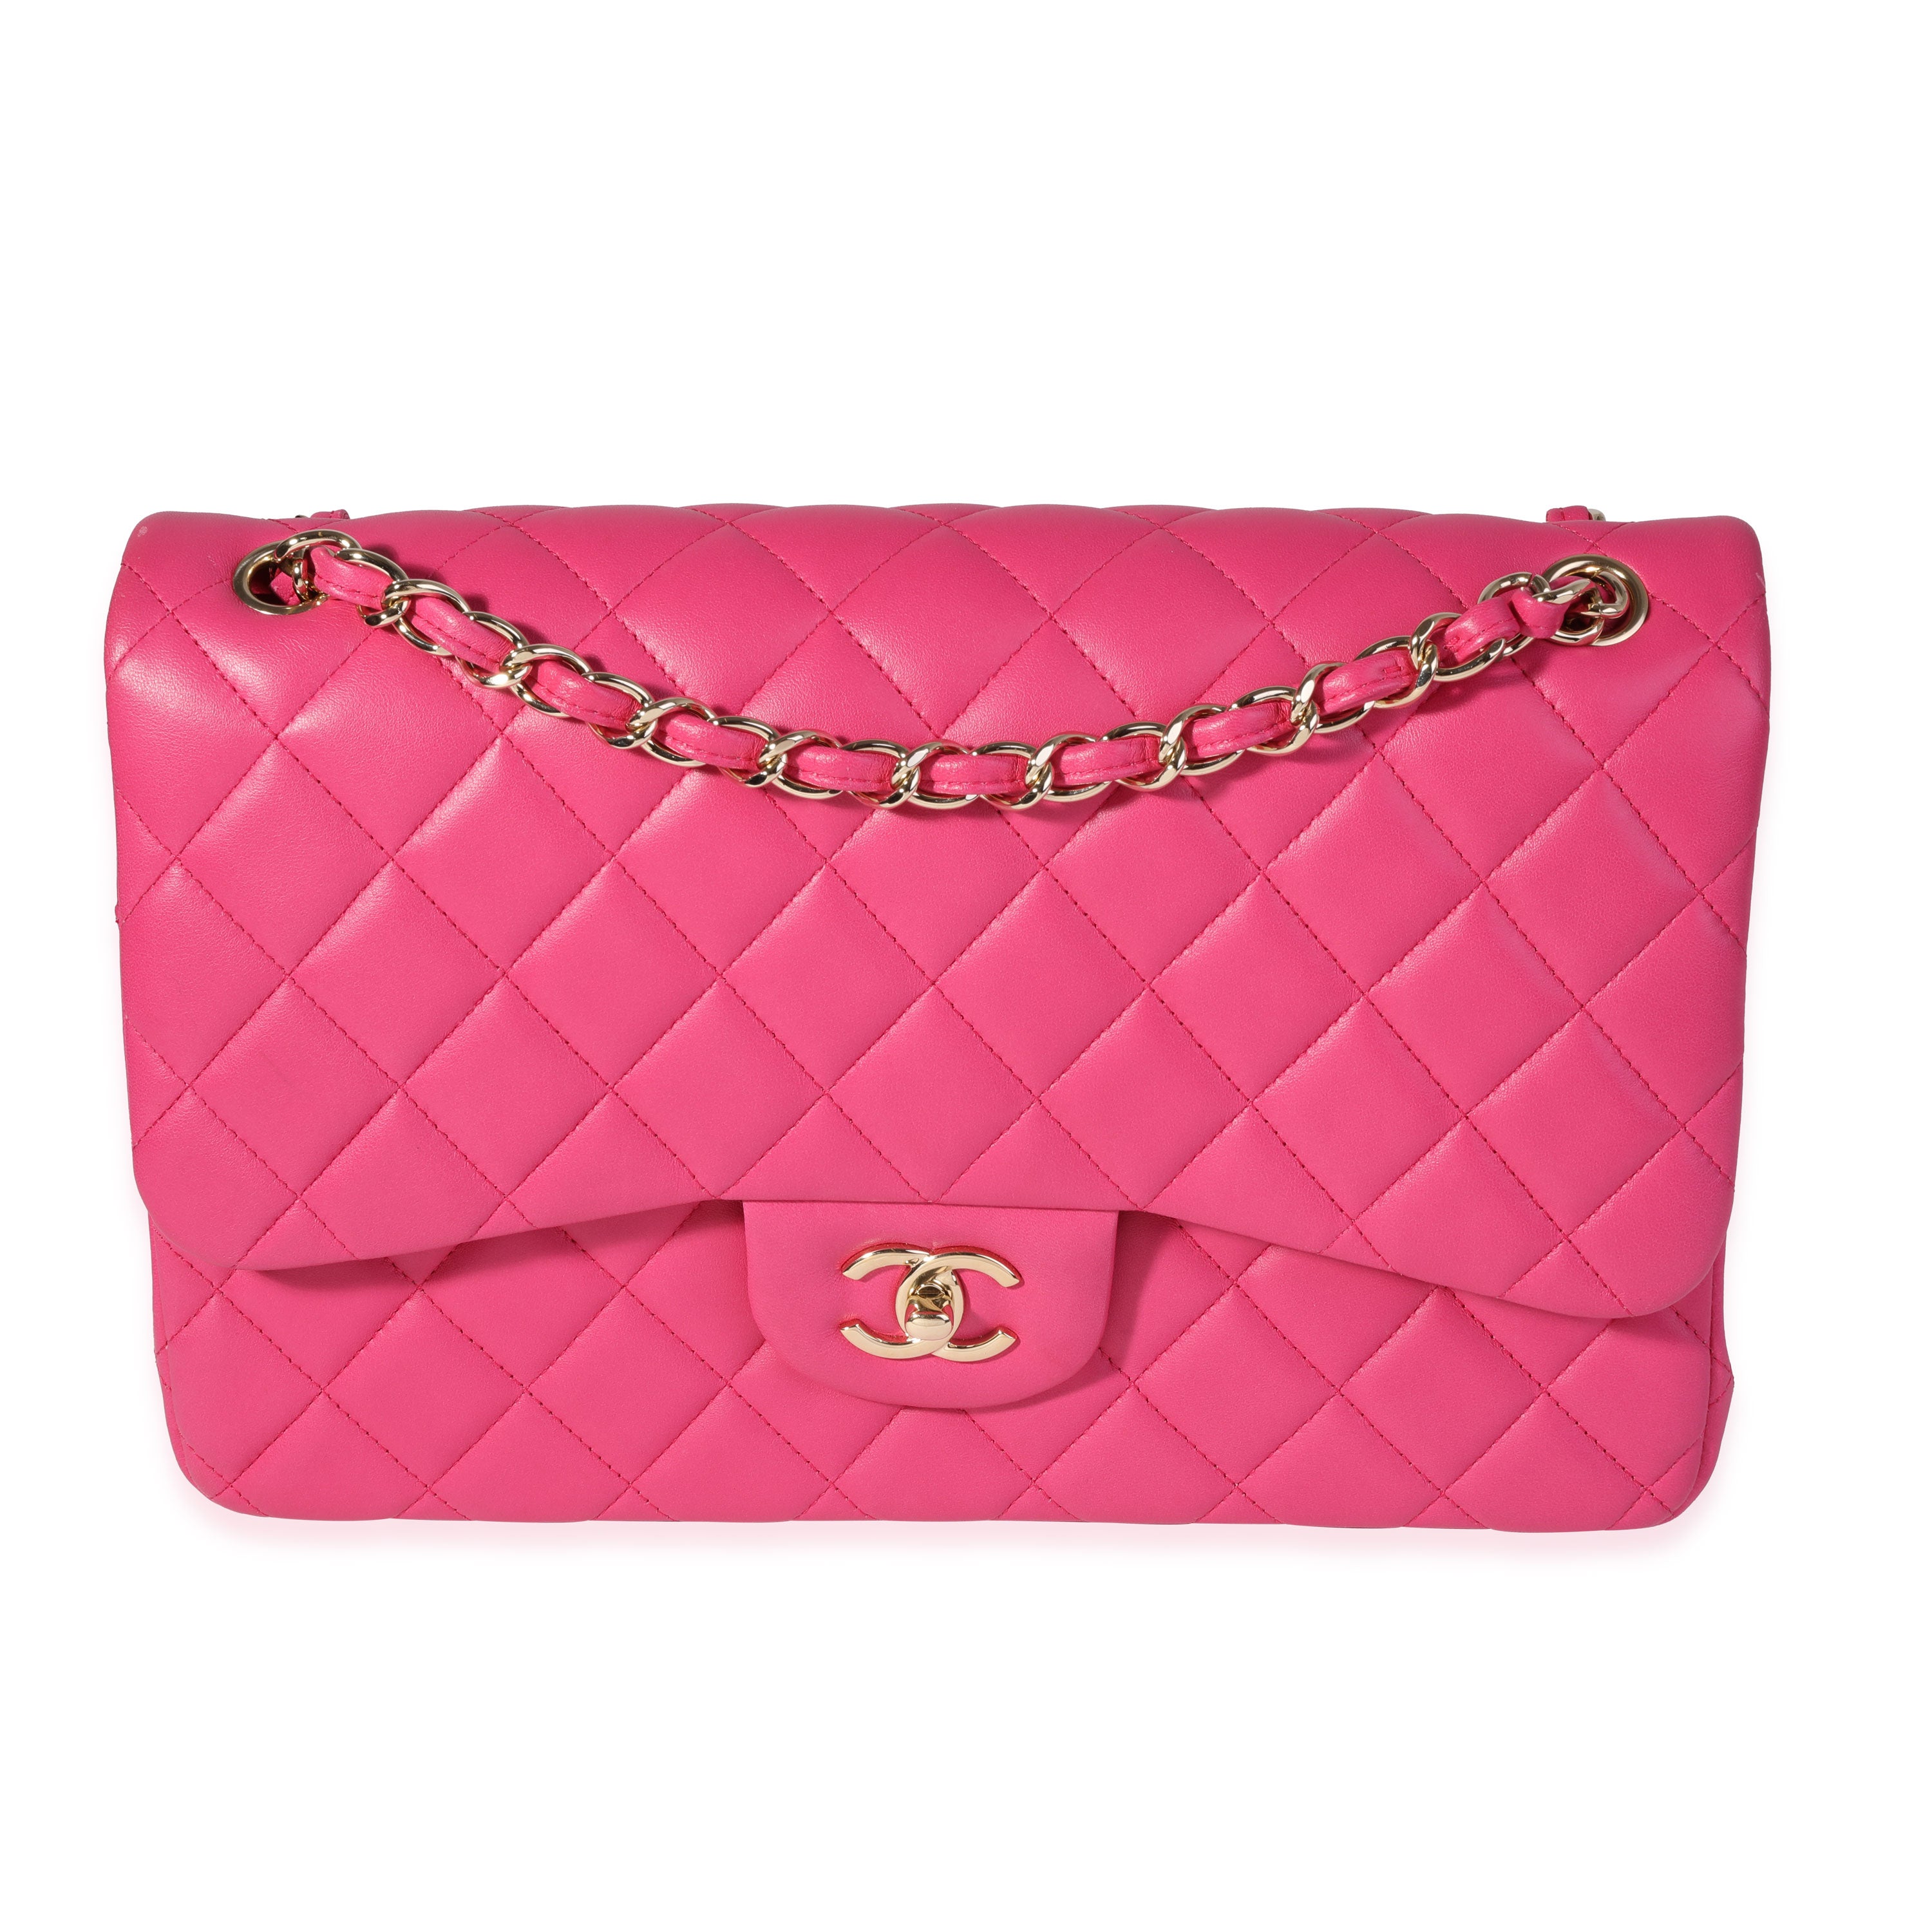 pink chanel clutch bag black